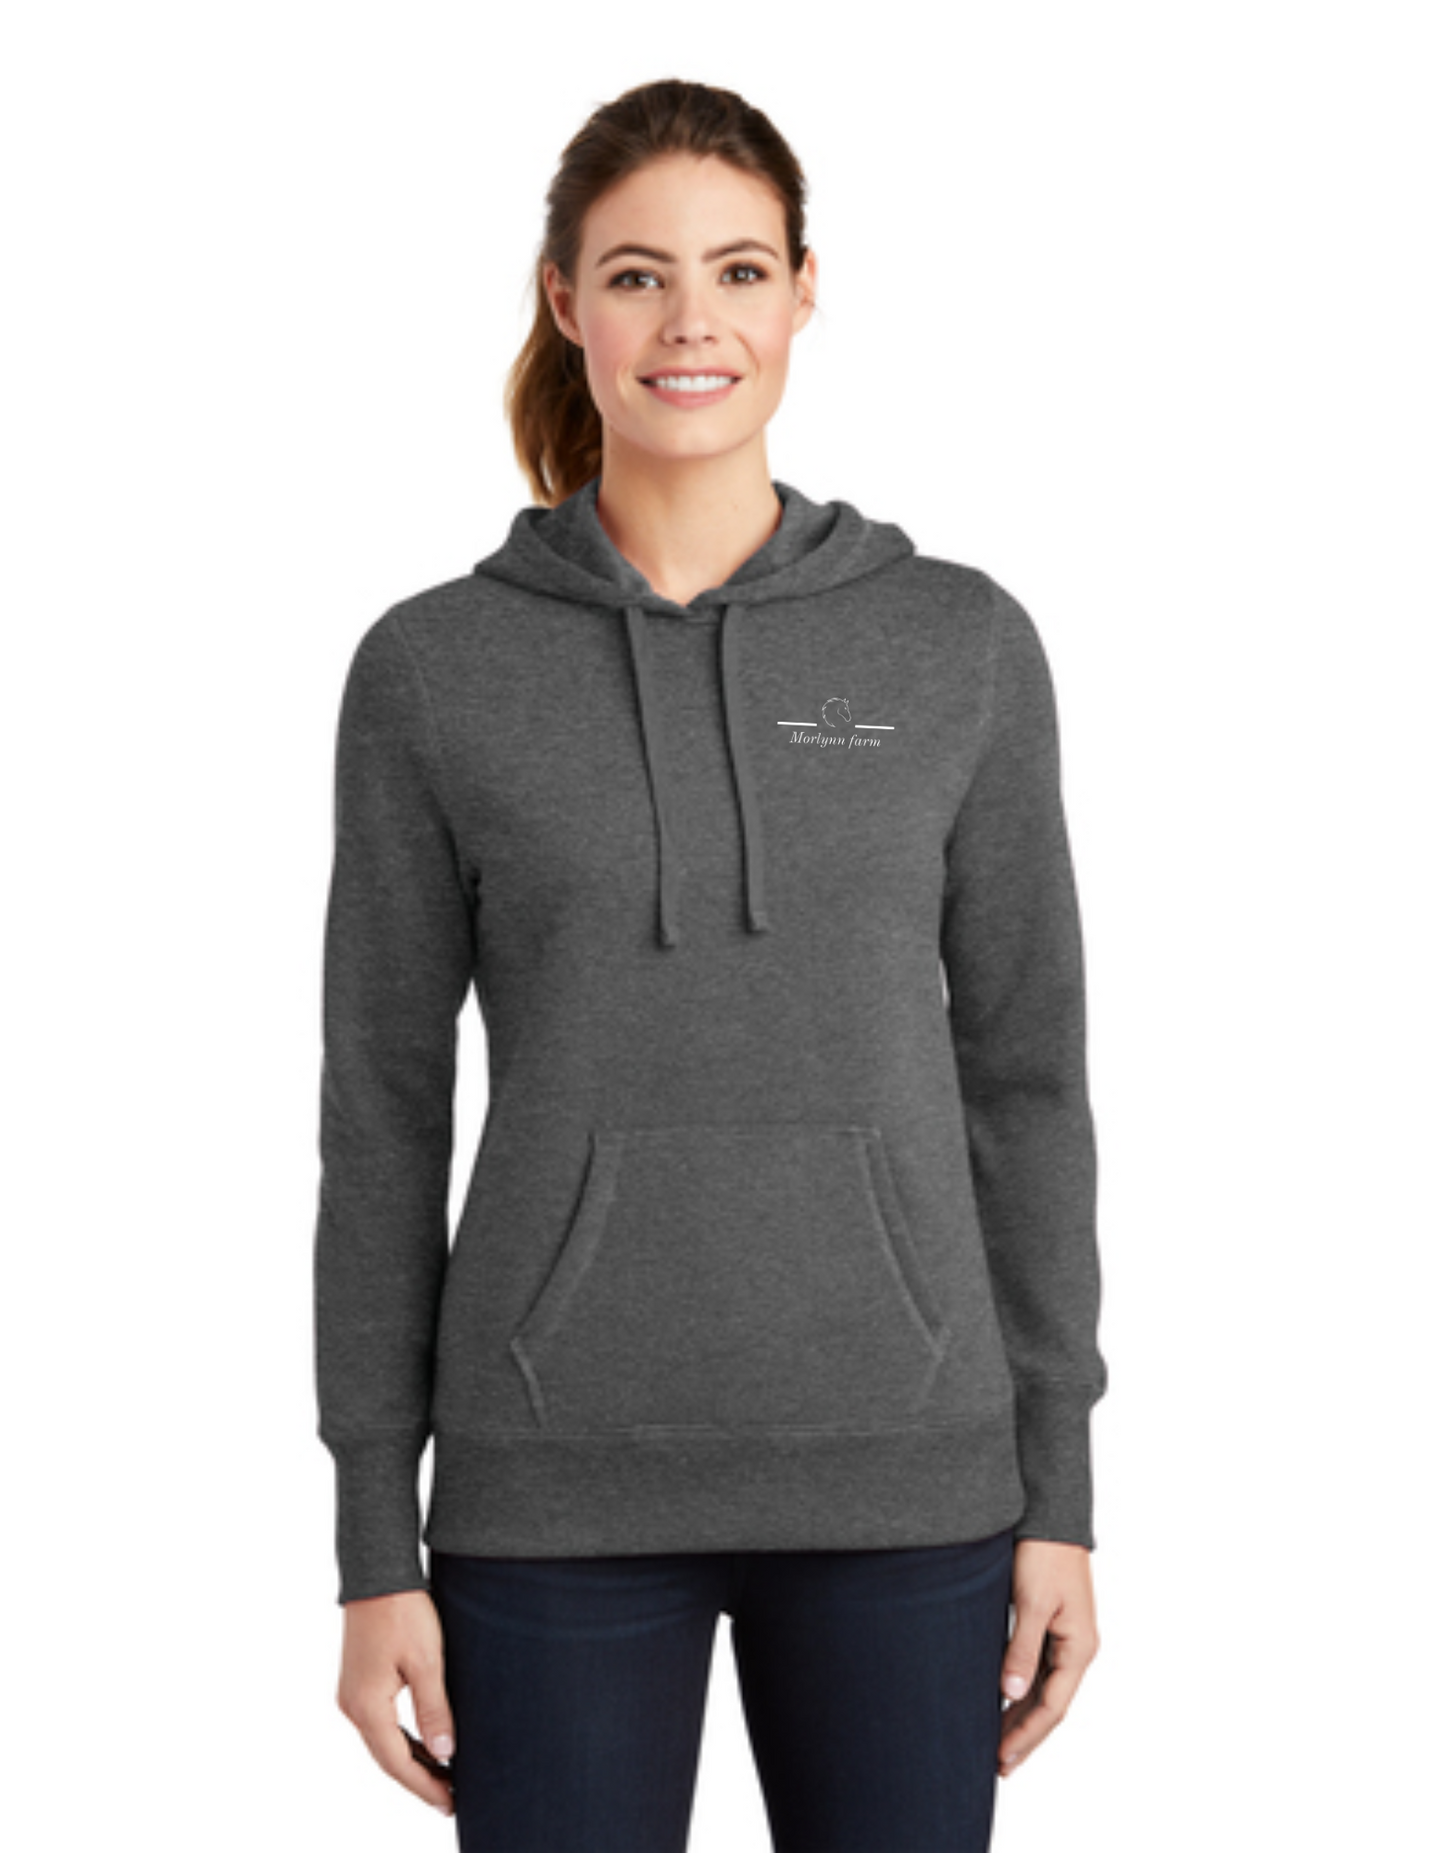 Morlynn Farm - Sport-Tek® Ladies Pullover Hooded Sweatshirt